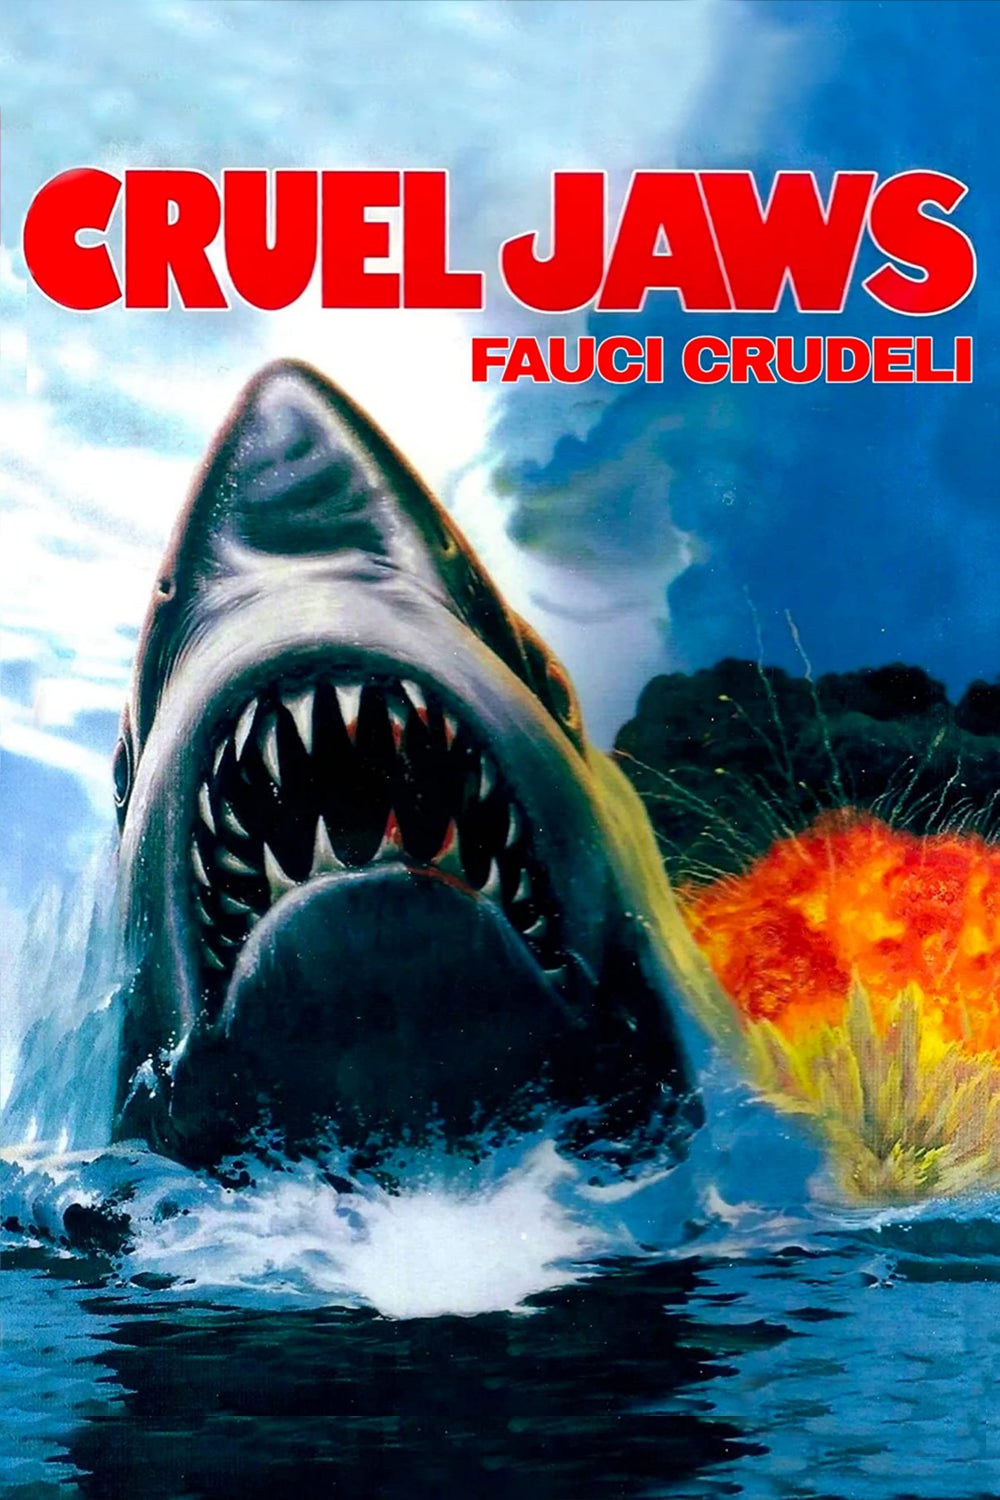 Fauci Crudeli – Cruel Jaws (1995)